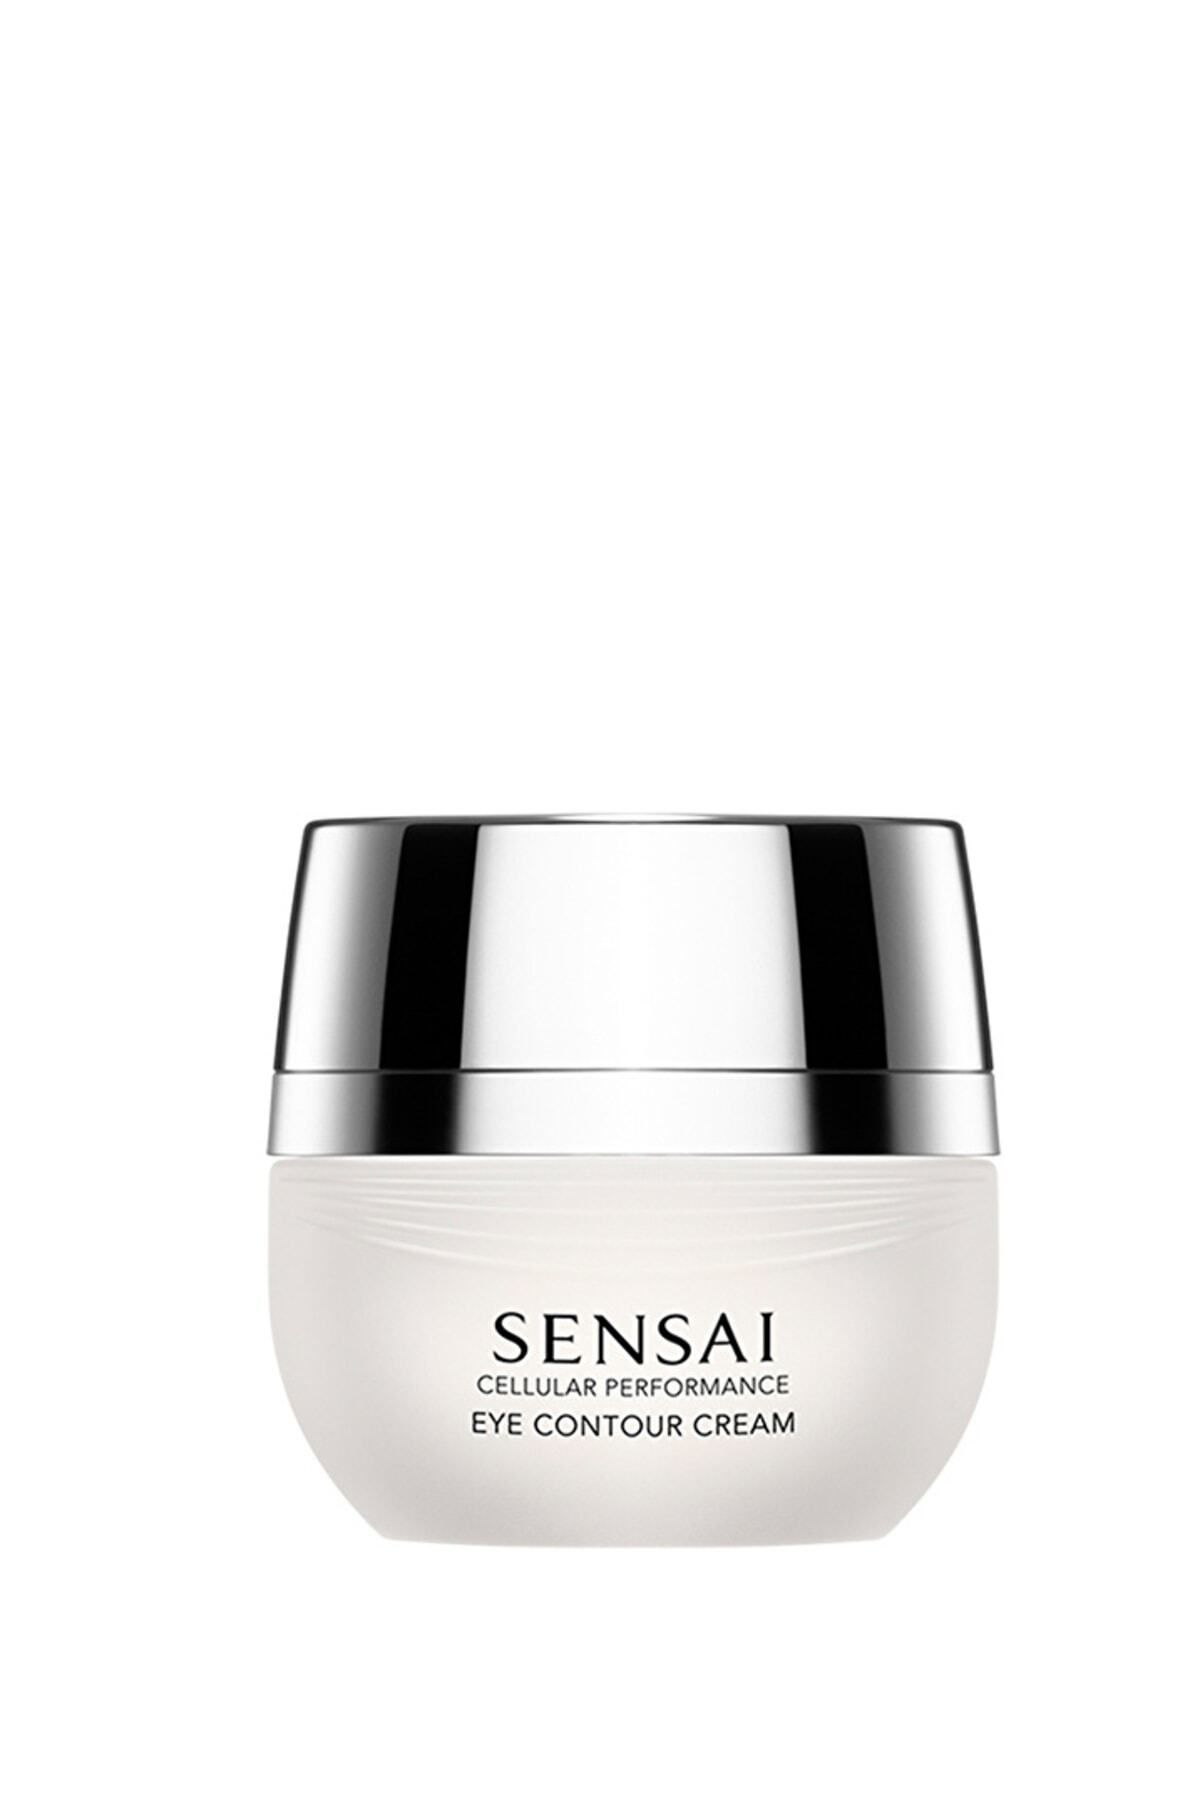 Sensai Cellular Performance Eye Contour Cream 15ml Renewal34